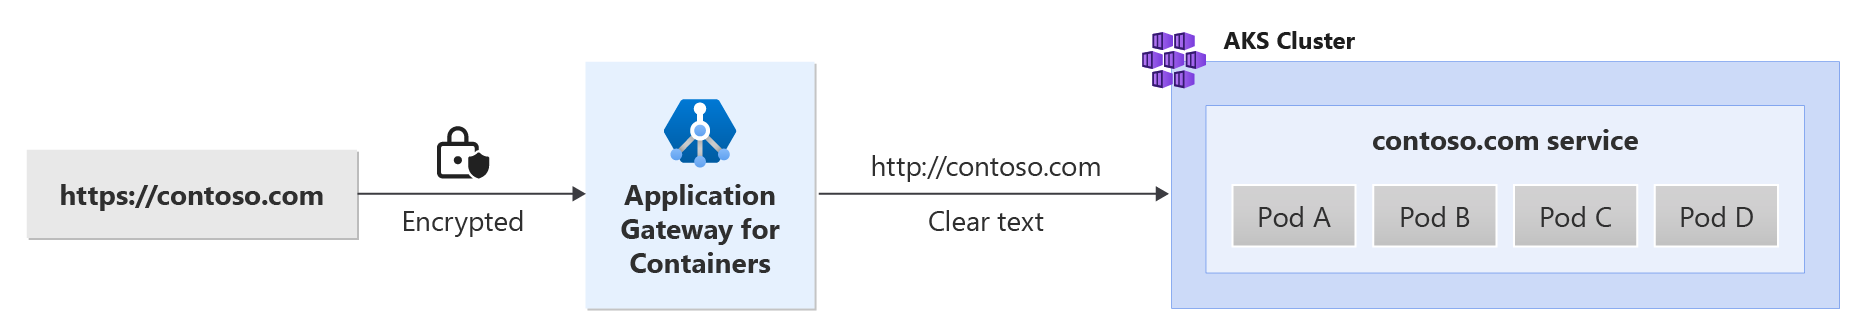 Application Gateway for Containers を使用した SSL オフロードを示す図。